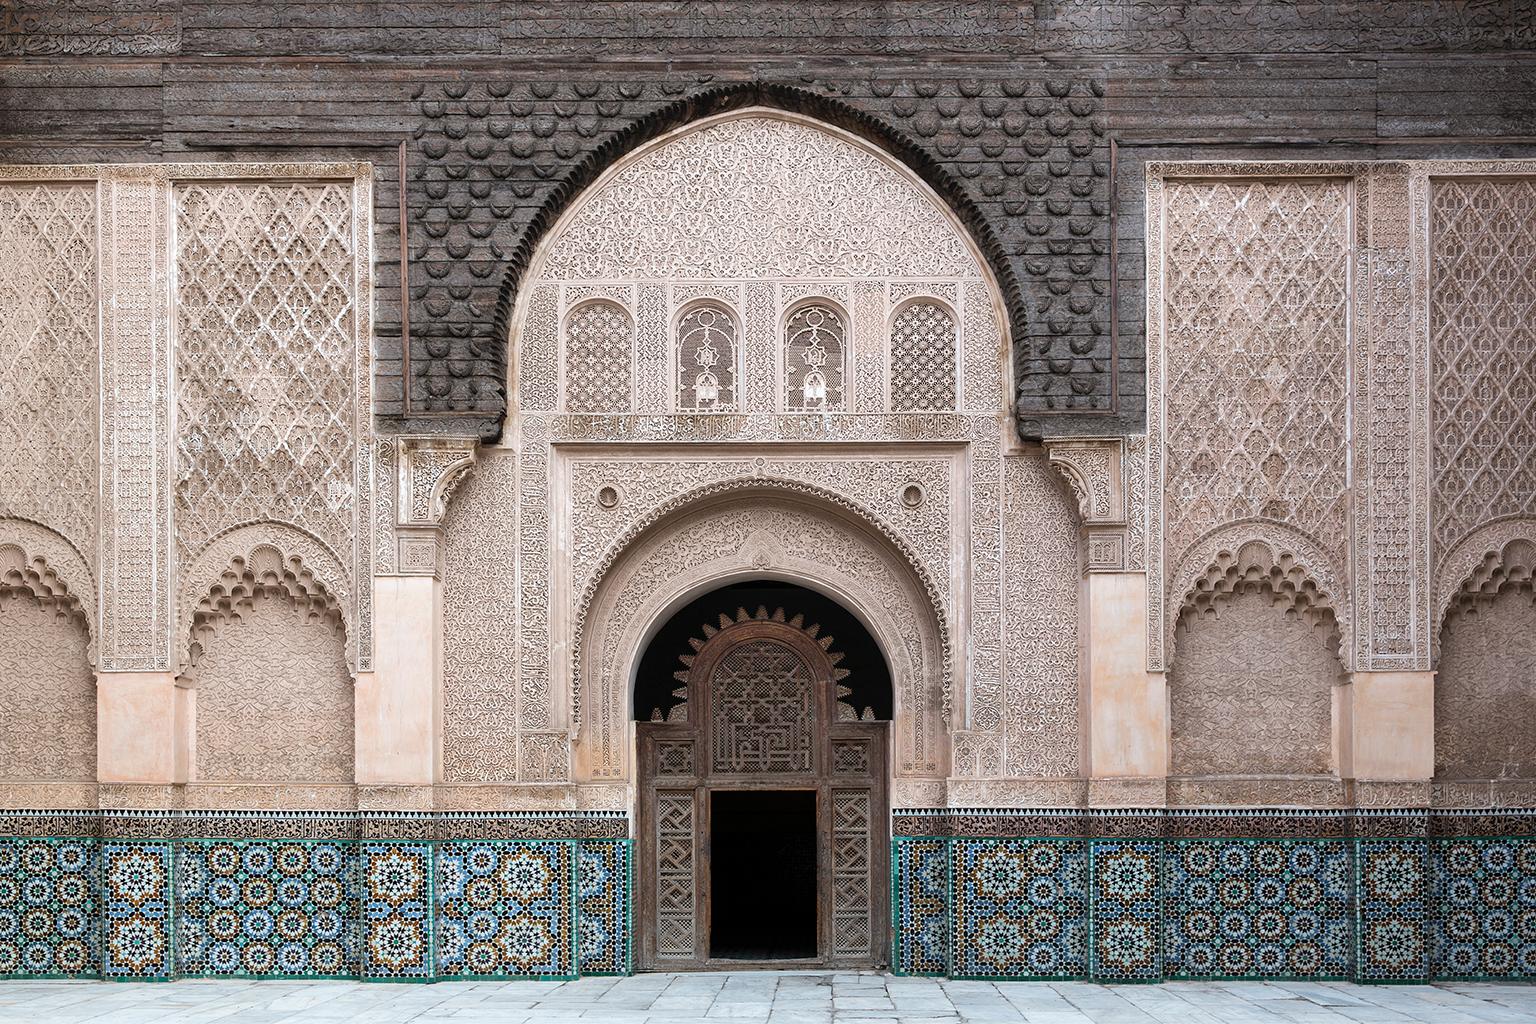  Cosmo Condina Color Photograph - Islamic architectural detail of the Madrasa courtyard, Fez, Morocco, 2016